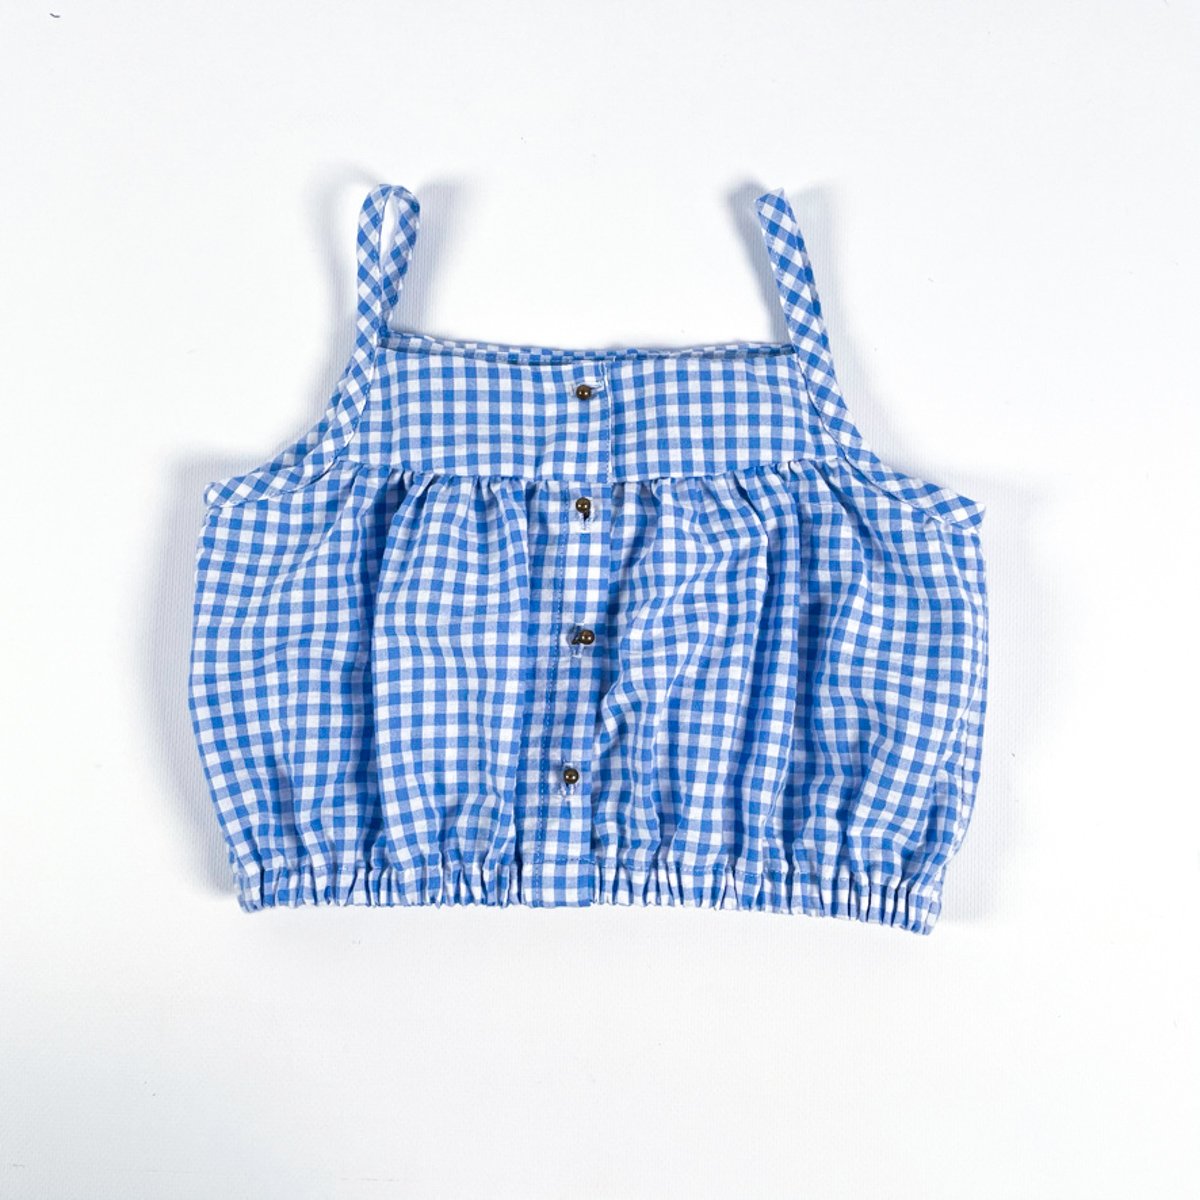 Ikatee - ZANZIBAR Top or Dress - Women 32-52 - Paper Sewing Pattern